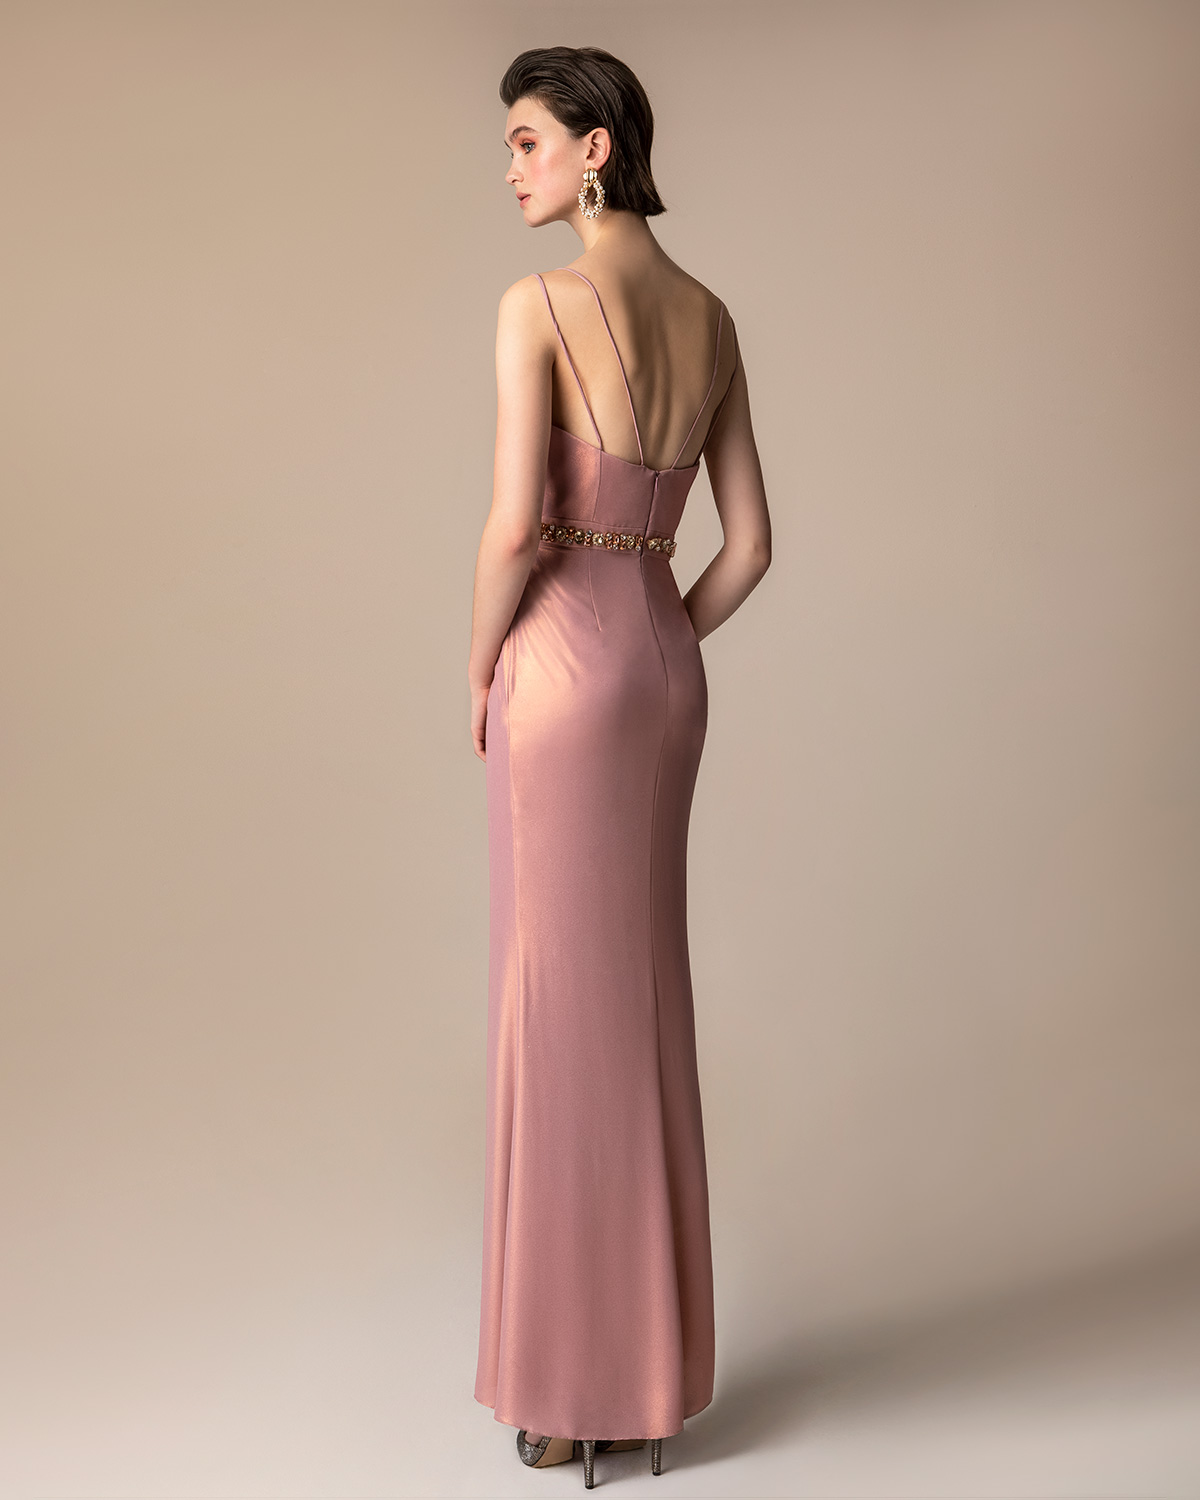 Long evening lurex dress with beading around the waist